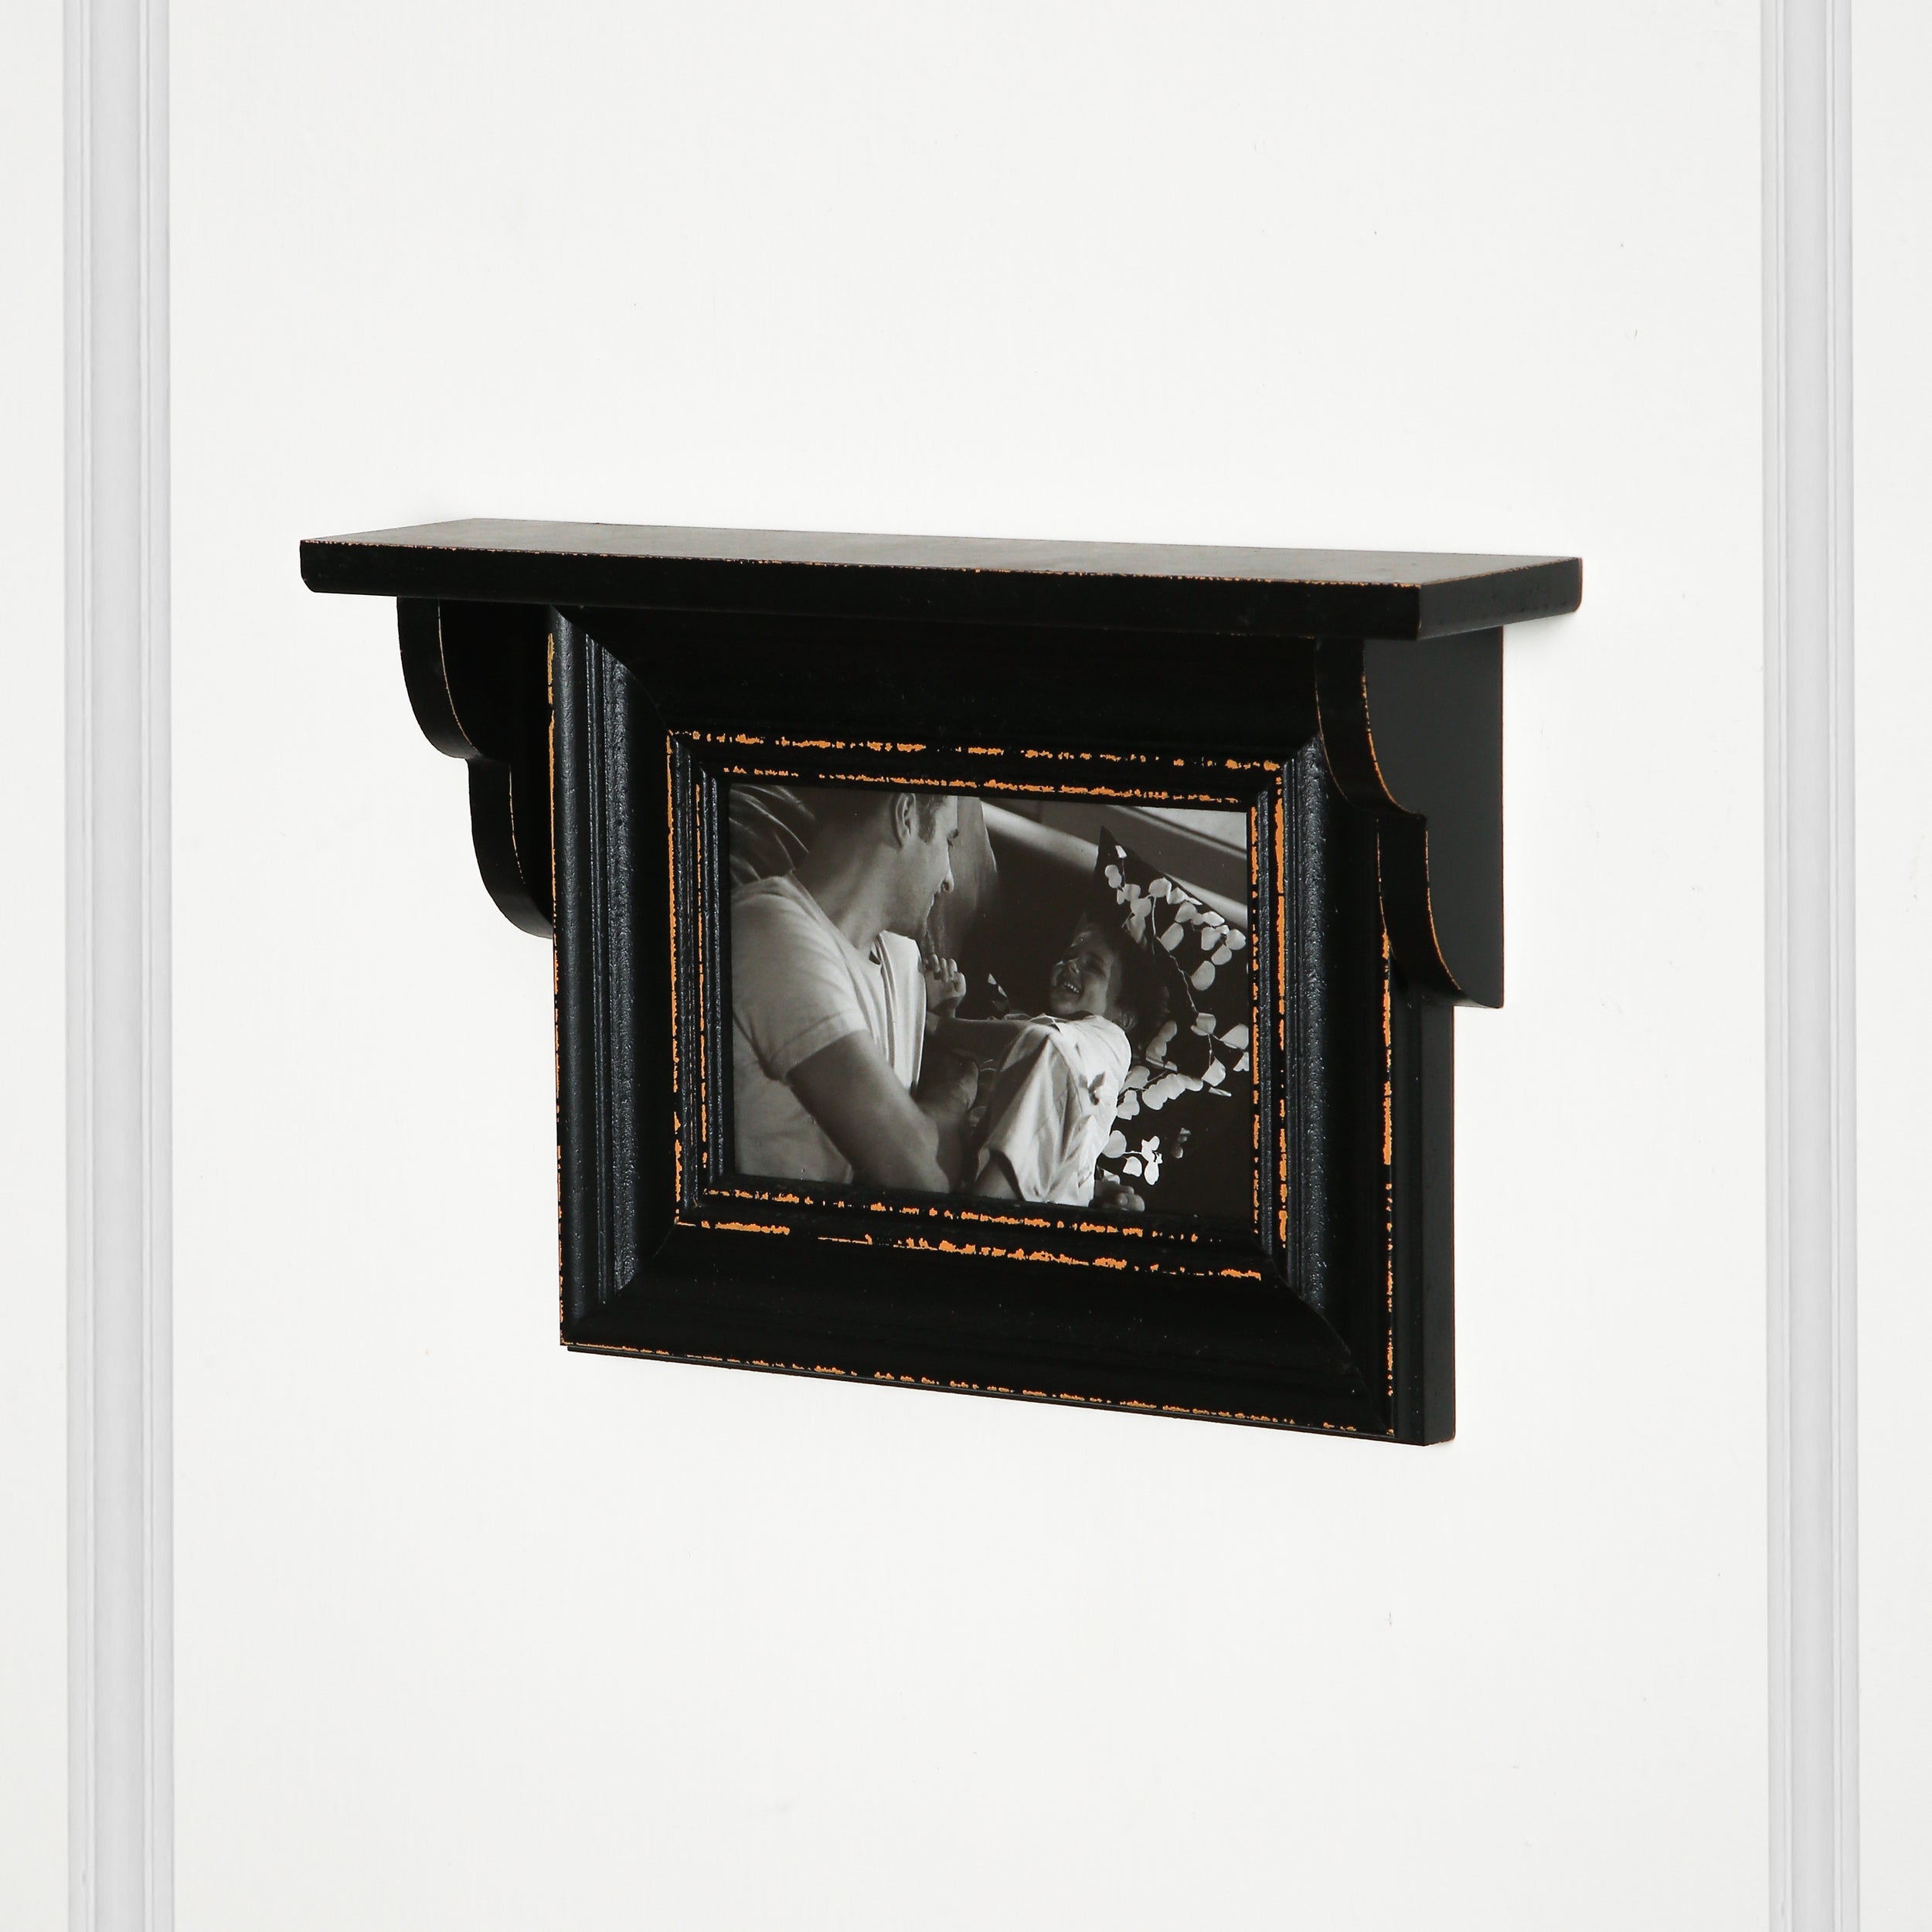 Horizontal photoframe with shelf